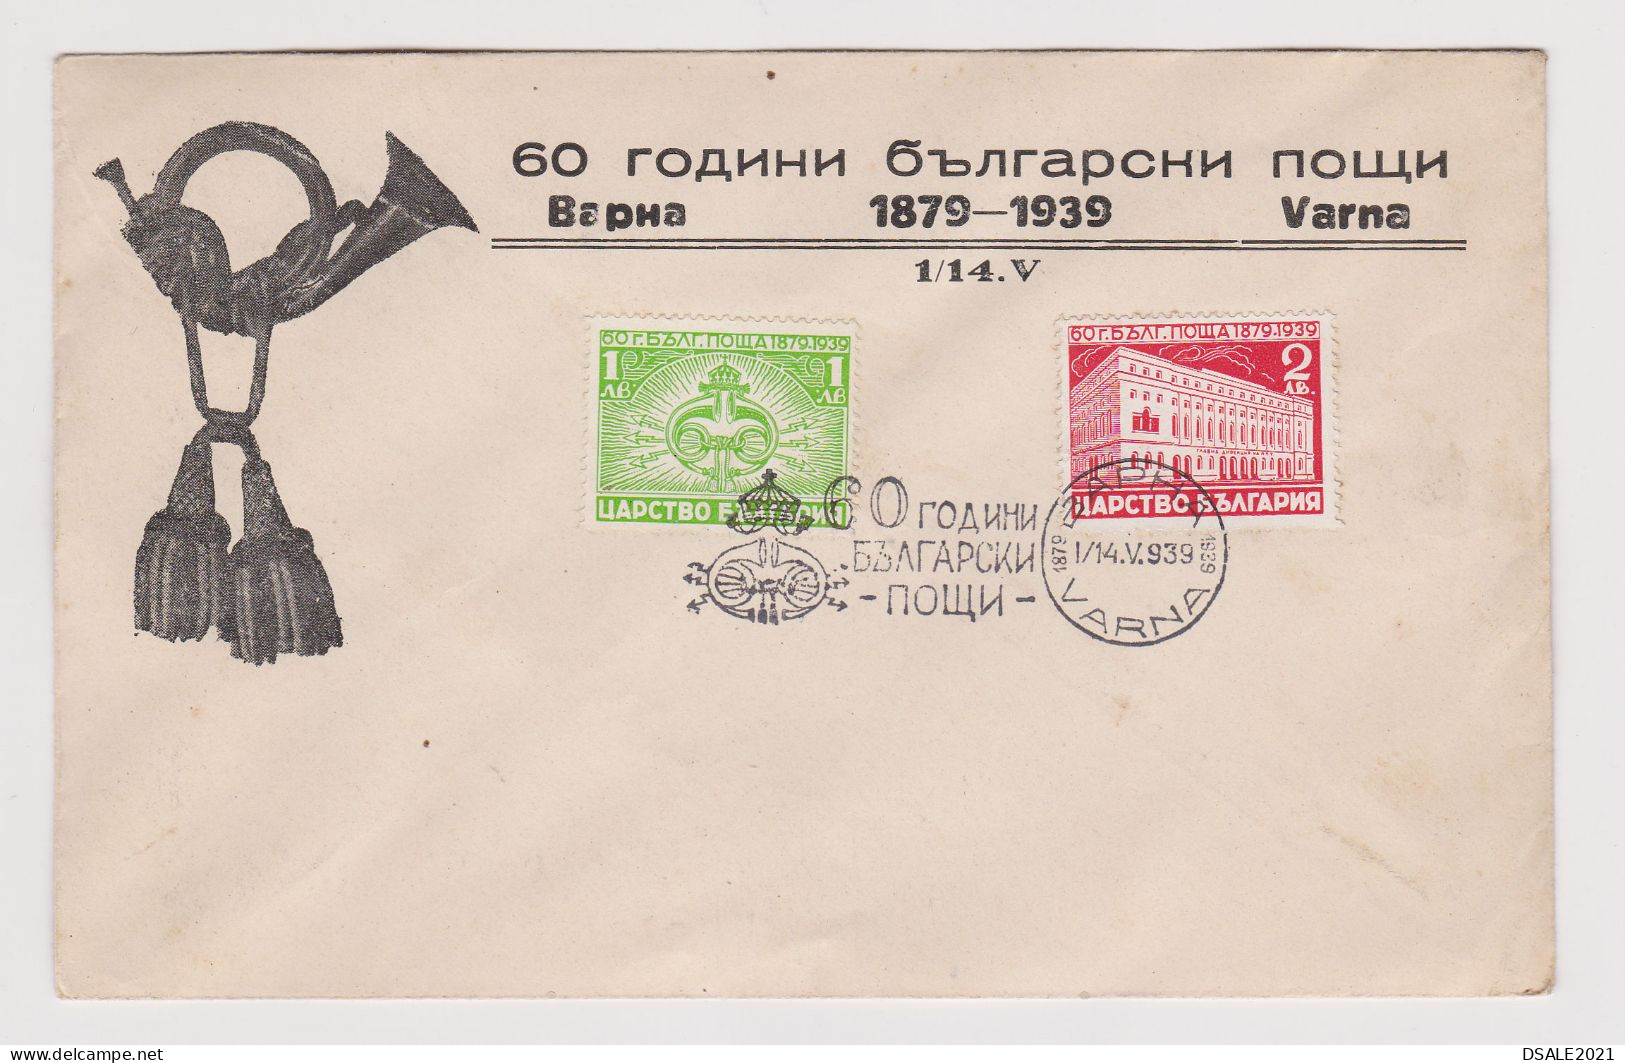 Bulgaria Bulgarie Bulgarien 1939 Cover FDC Bulgarian Posts 60th Anniversary VARNA Special Machine Cacahet (66295) - FDC